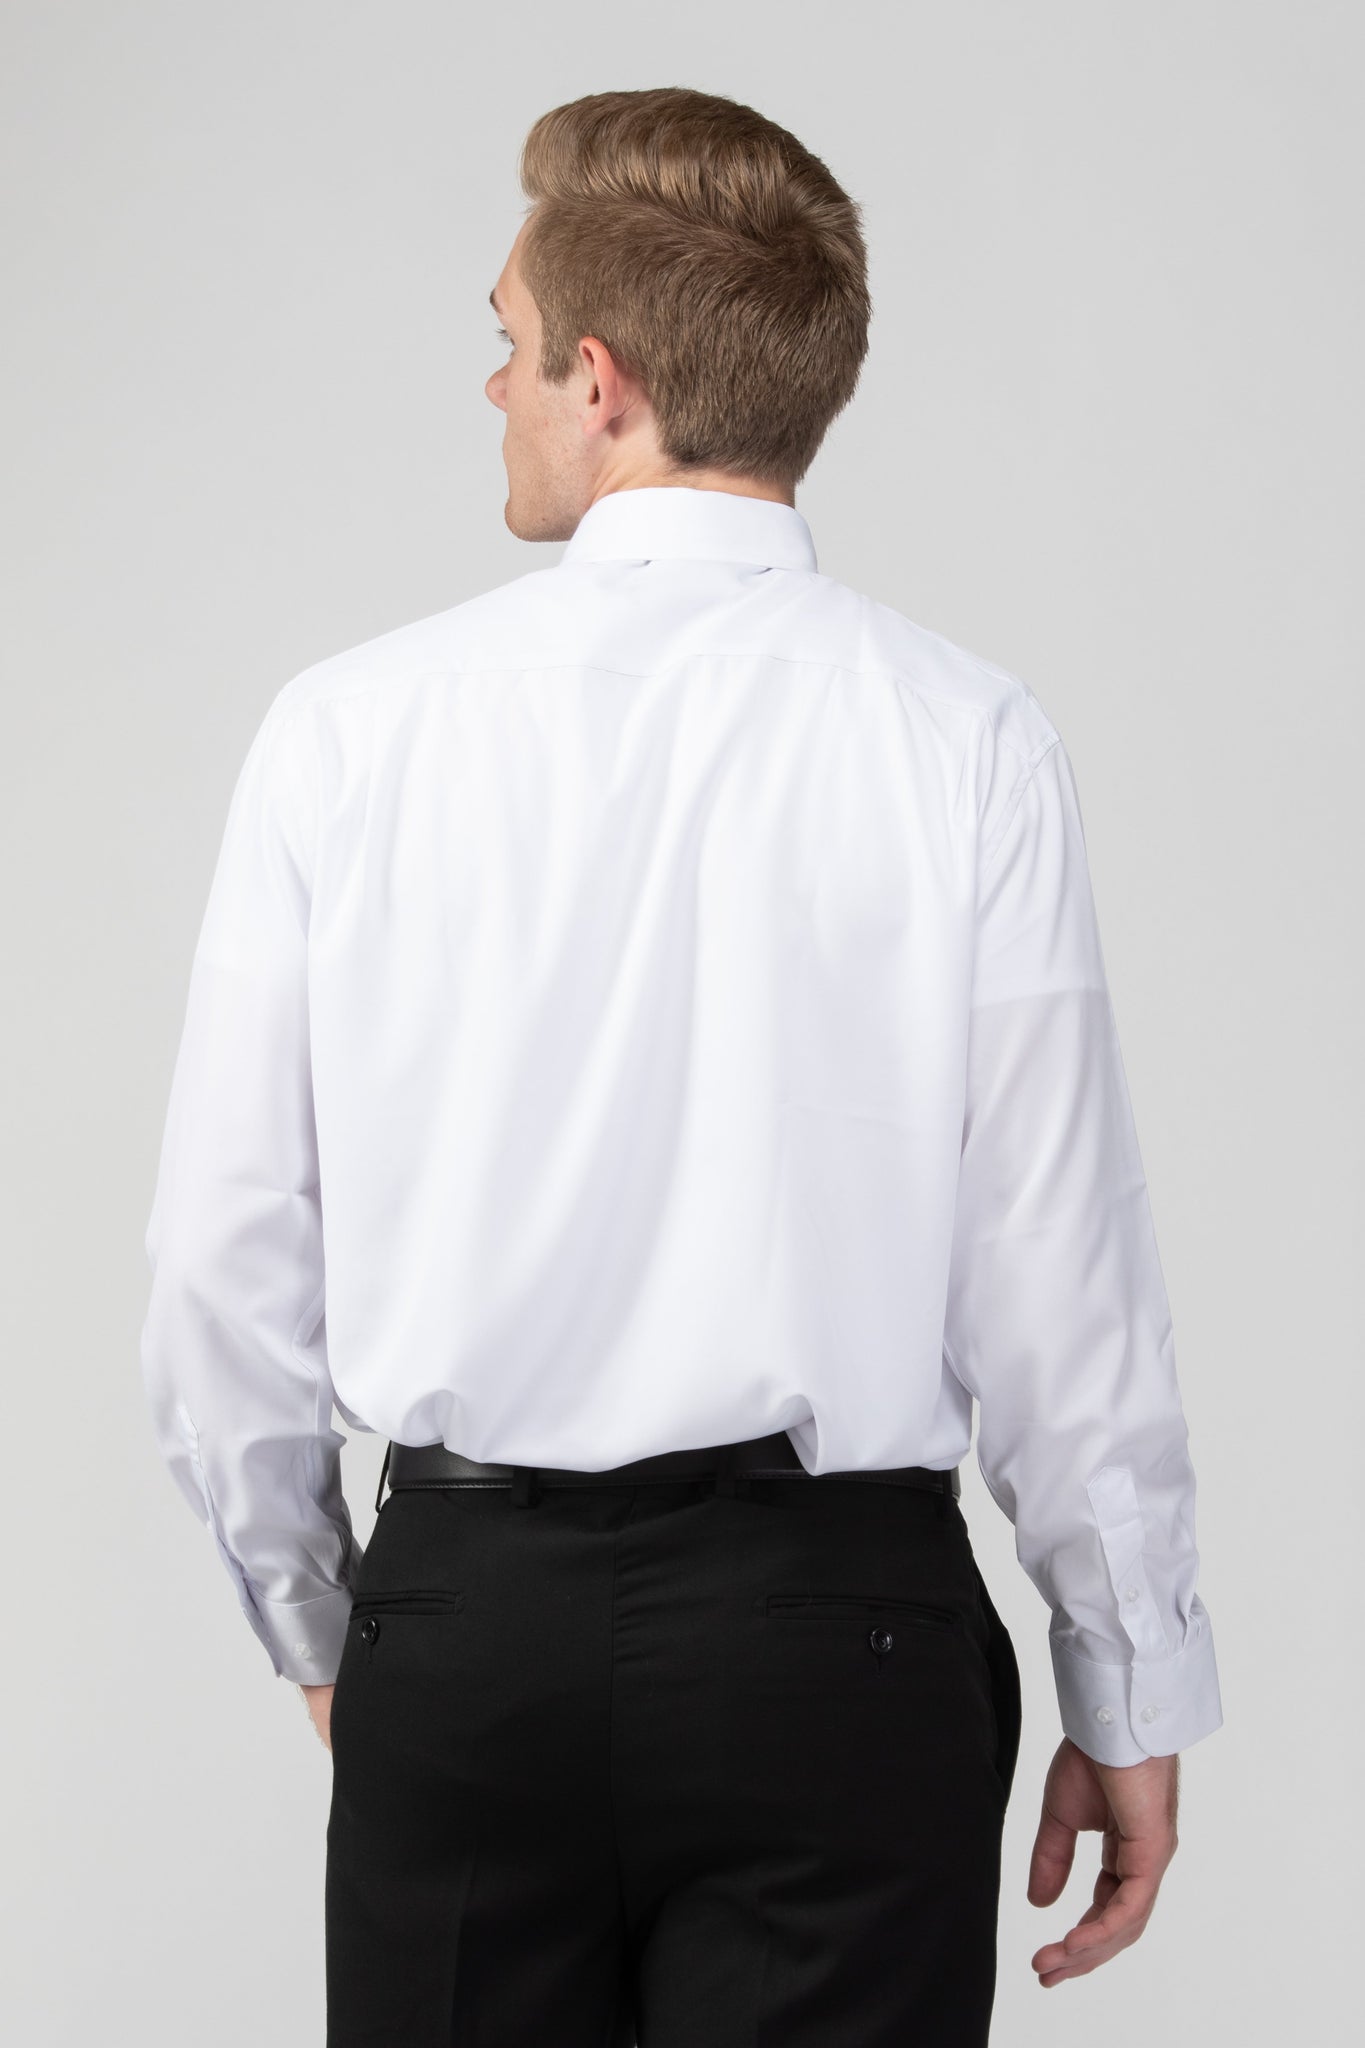 MissionaryMall Robbins & Brooks 4-Way Flex White Dress Shirt Long Sleeve